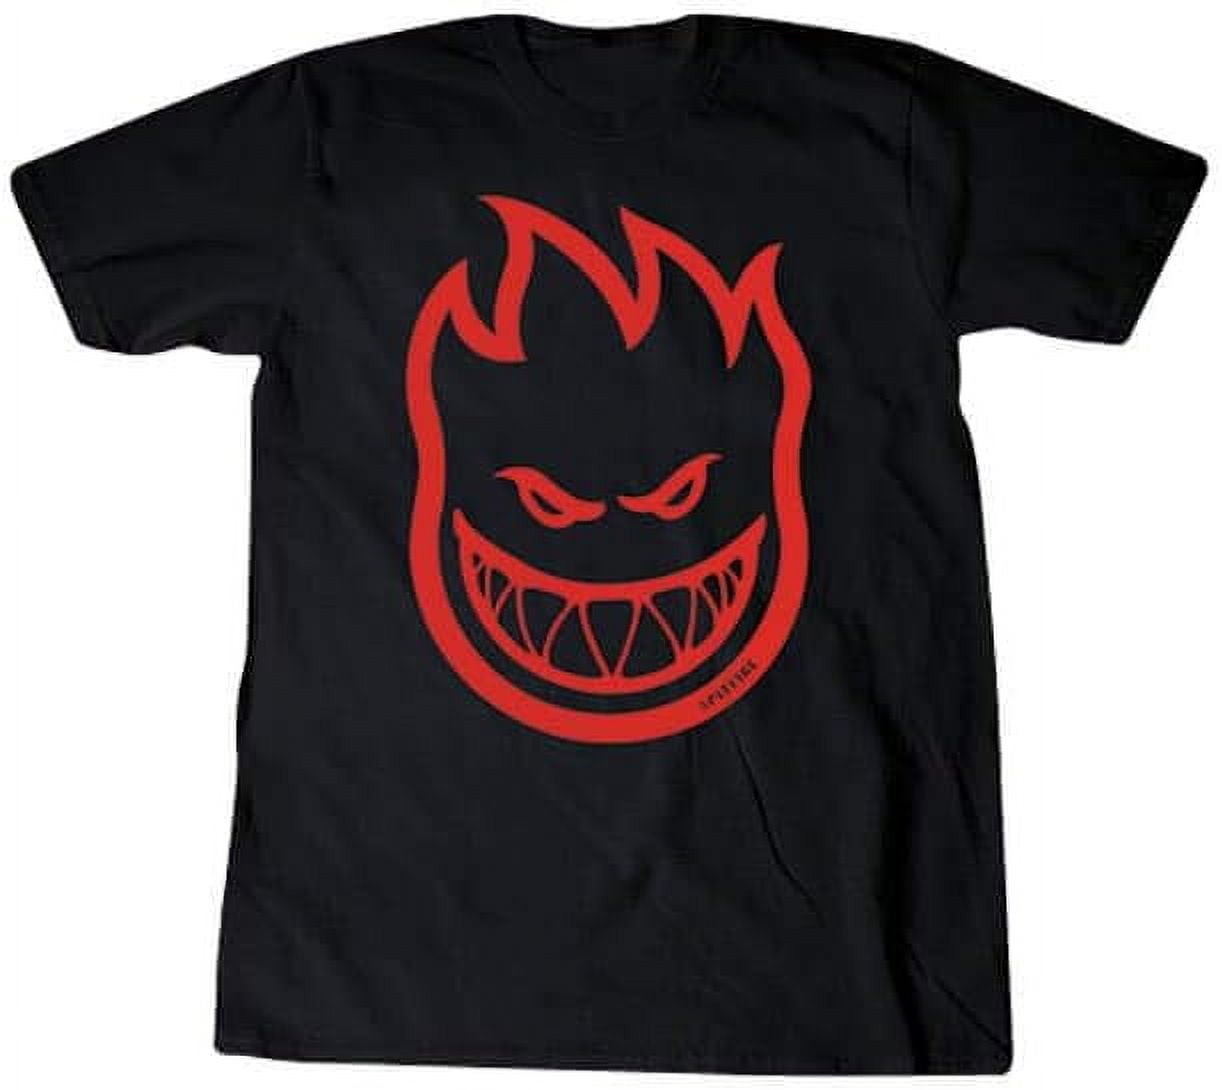 Skateboard T-Shirt [Large] Black/Red - Walmart.com